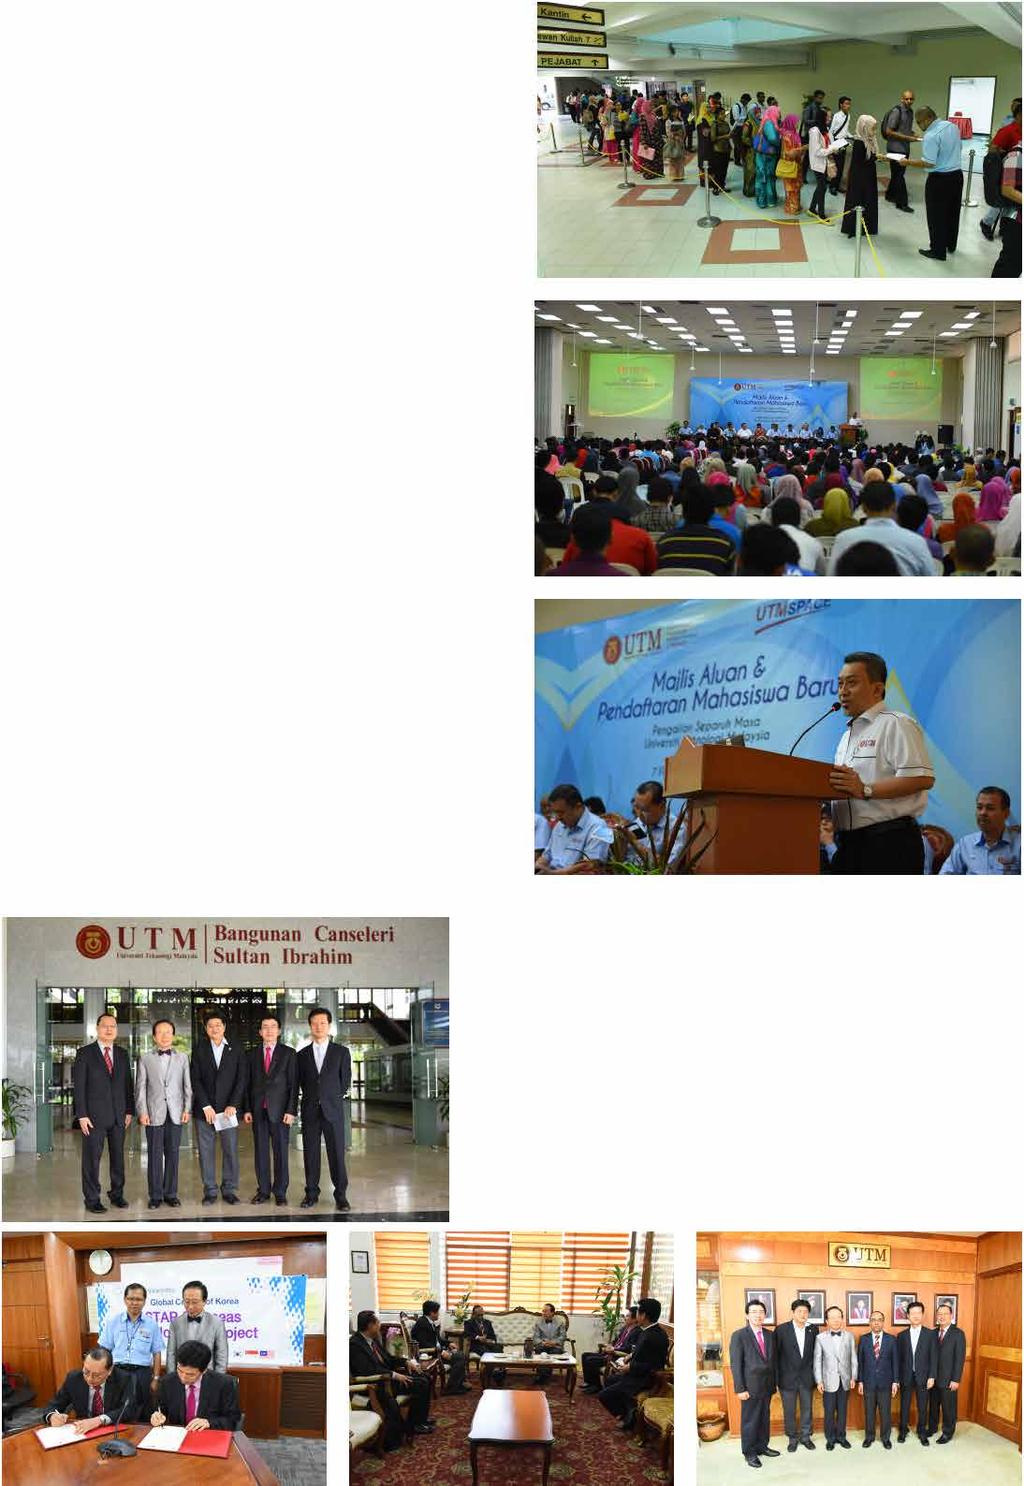 PENDAFTARAN MAHASISWA BAHARU PENGAMBILAN FEBRUARI 2015 UTMSPACE telah mengadakan sesi pendaftaran mahasiswa baharu yang pertama untuk tahun 2015 pada 7 Februari 2015 (Sabtu).